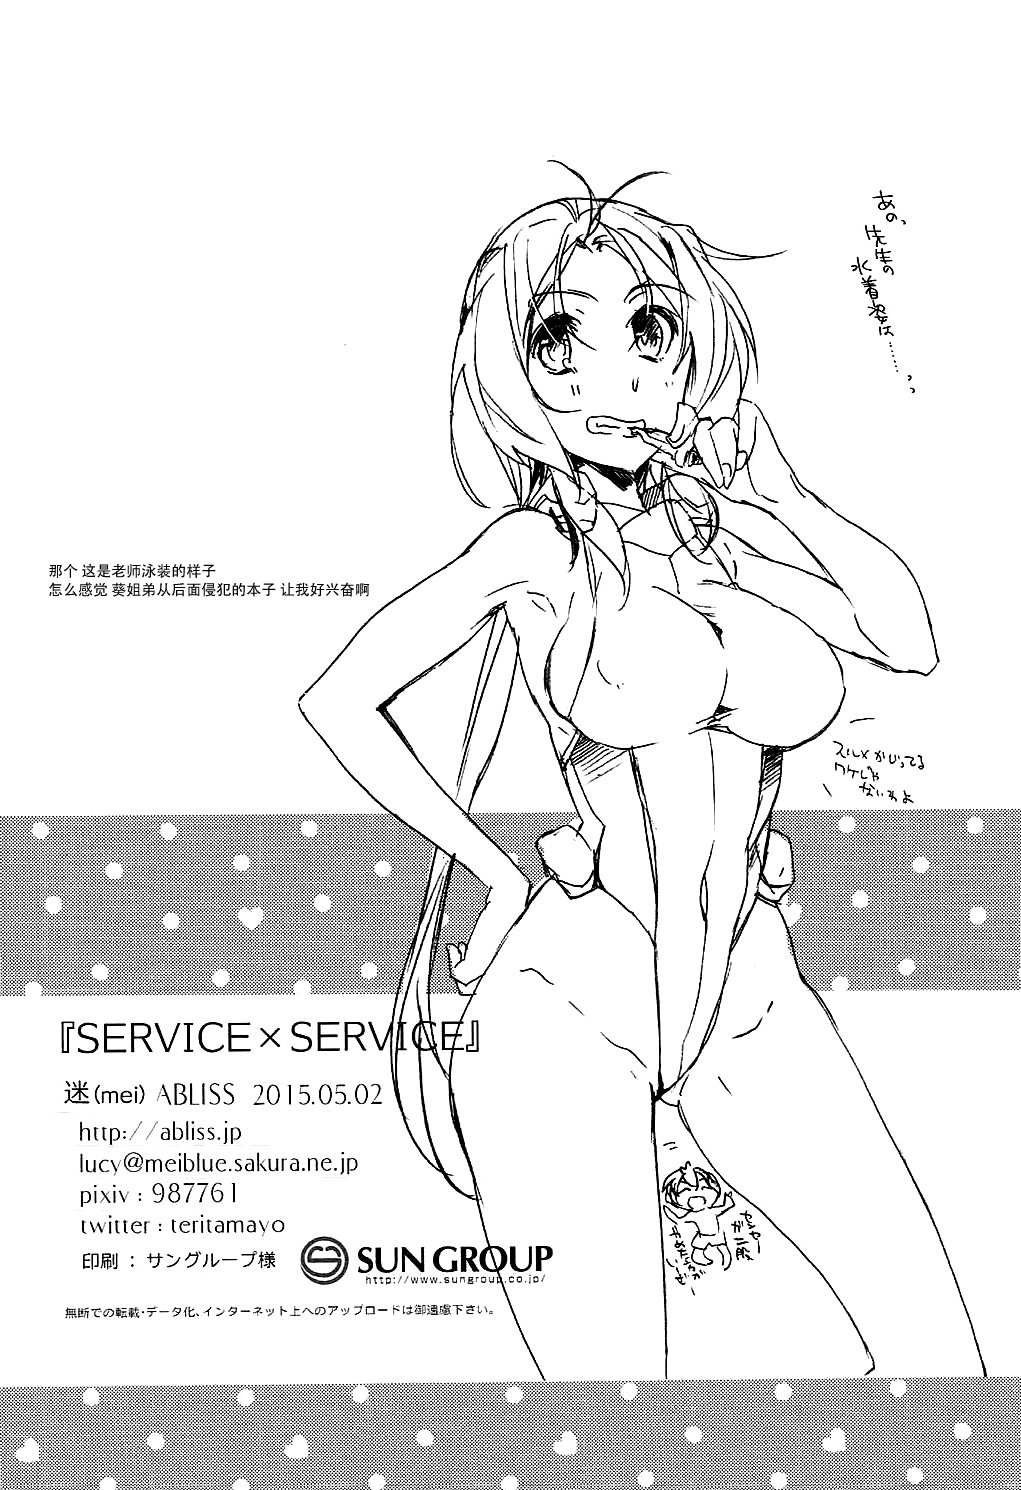 SERVICE×SERVICE